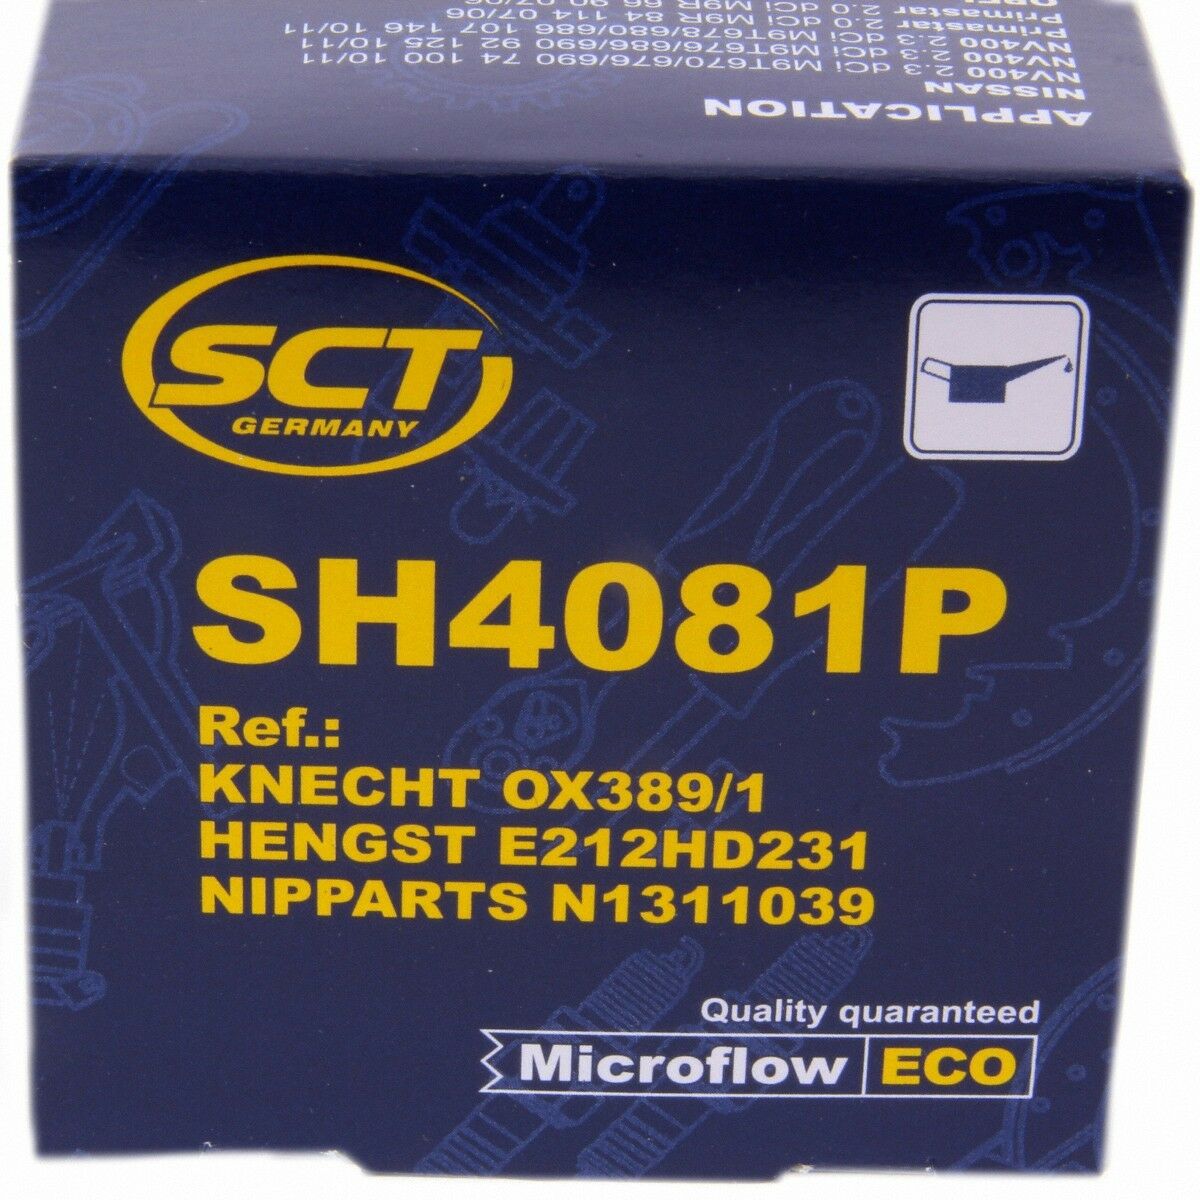 SCT Ölfilter SH4081P Filter Servicefilter Patronenfilter Nissan Opel Renault